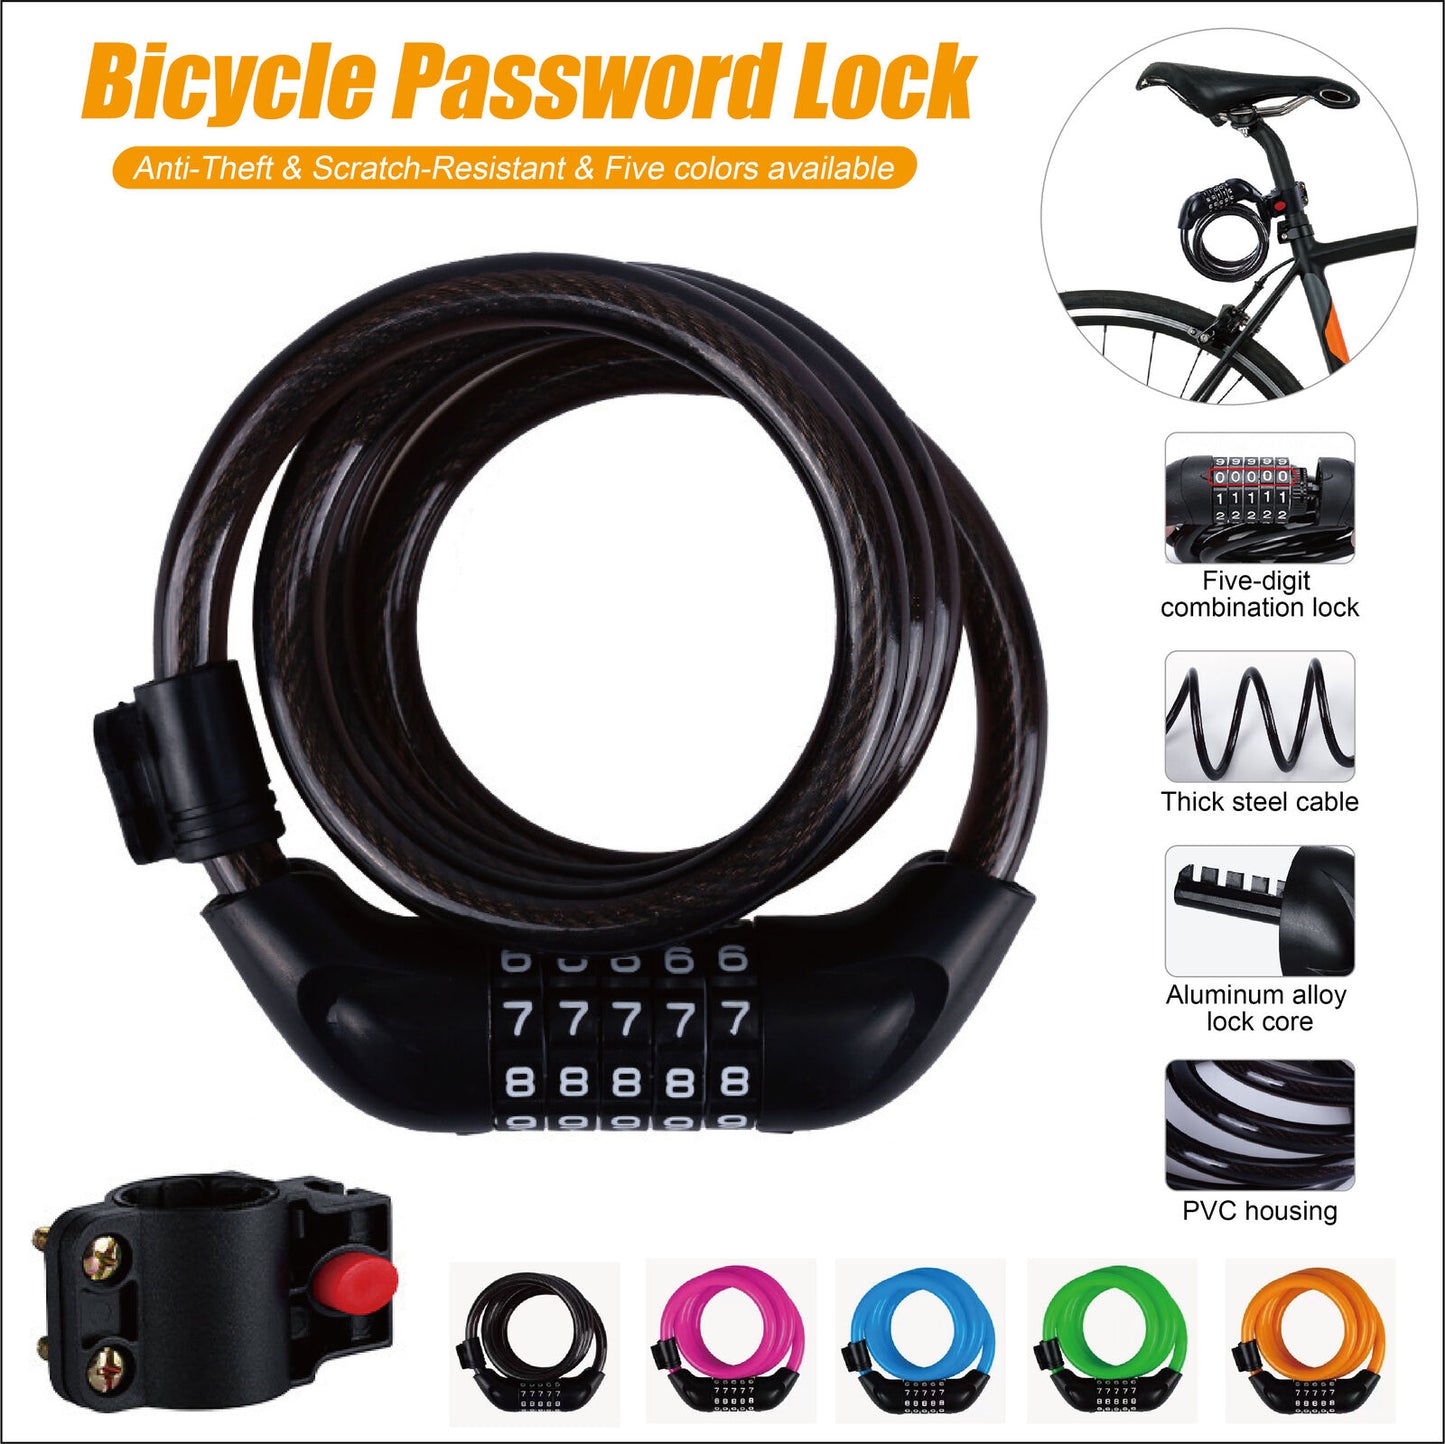 1.2m Bicycle Password Lock Anti-Theft Scratch-Resistant Lock/ Five colors